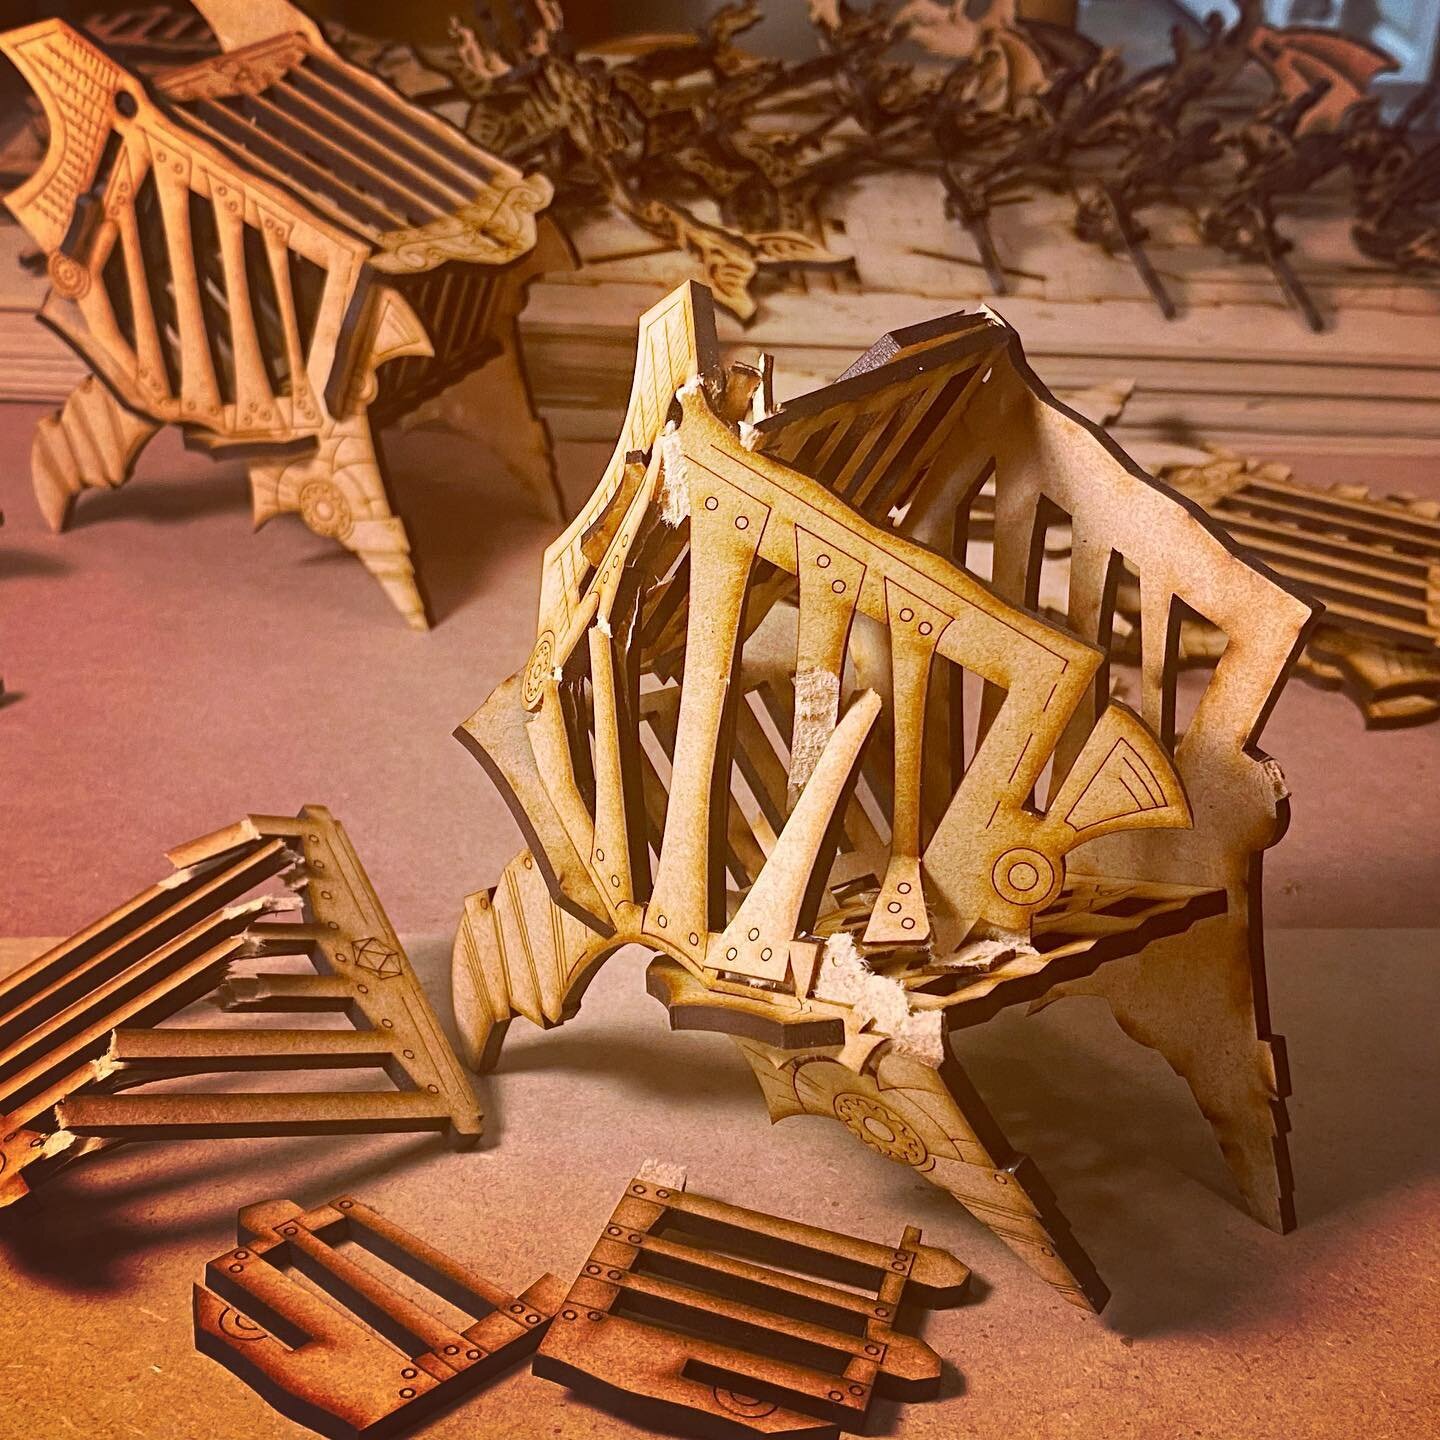 Sometimes, assembly leads to destruction.